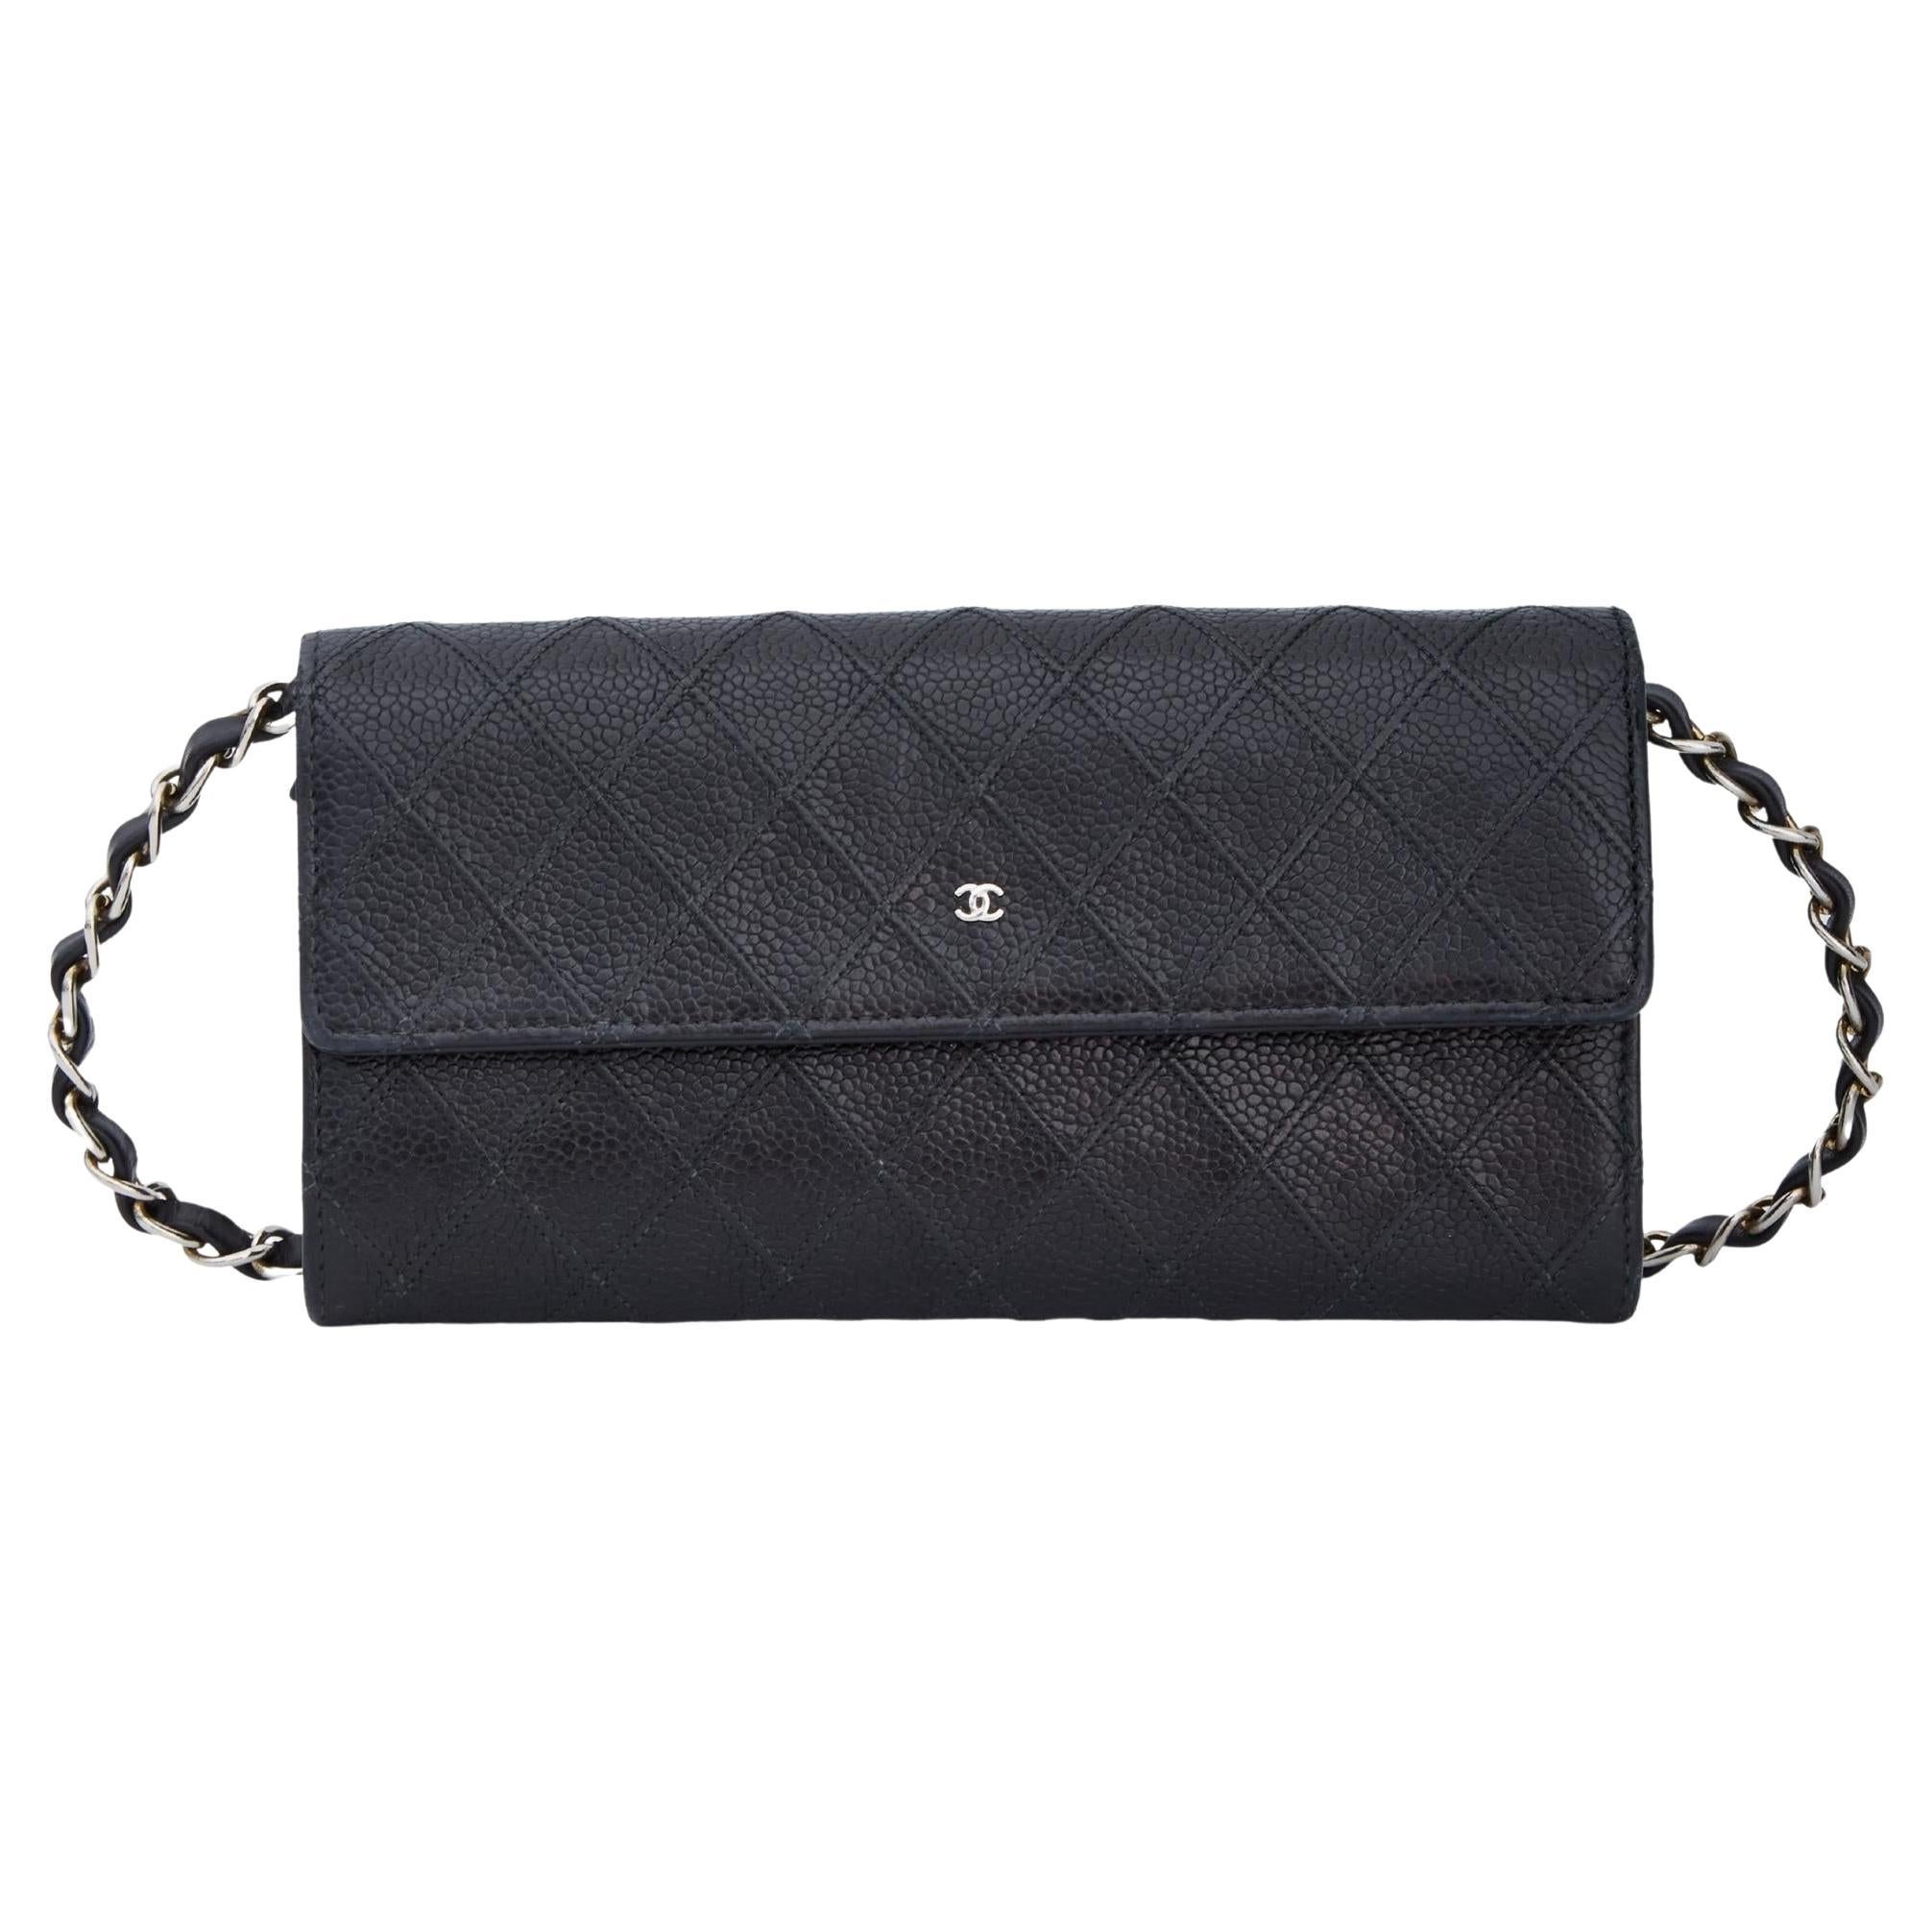 Chanel Black Caviar Long Wallet On A Chain Bag